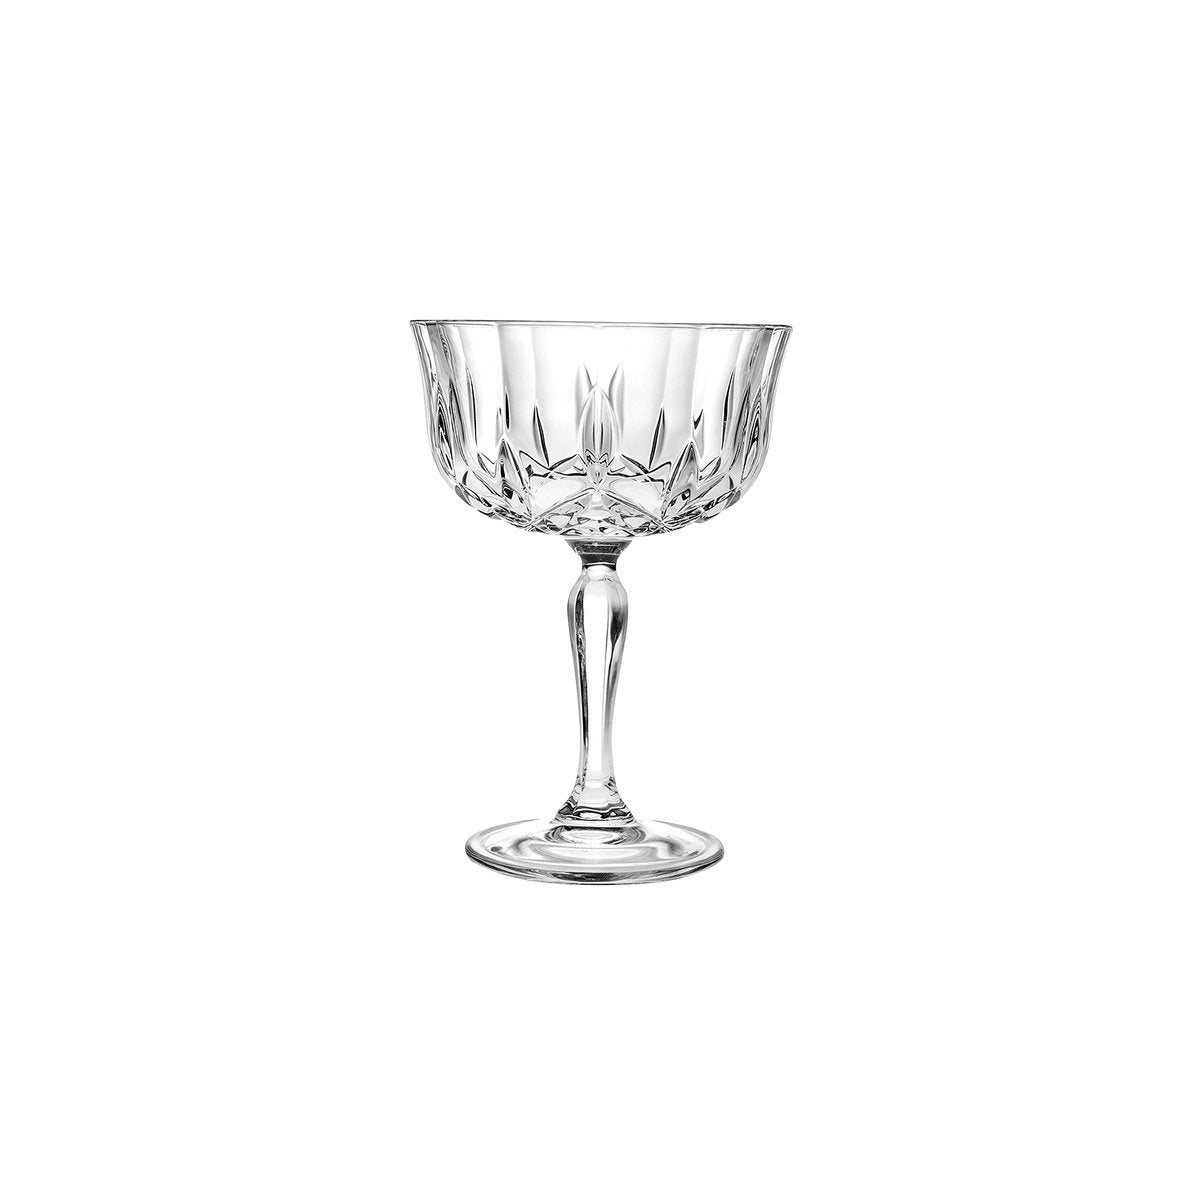 Coupe Champagne Glass - 240ml, Opera